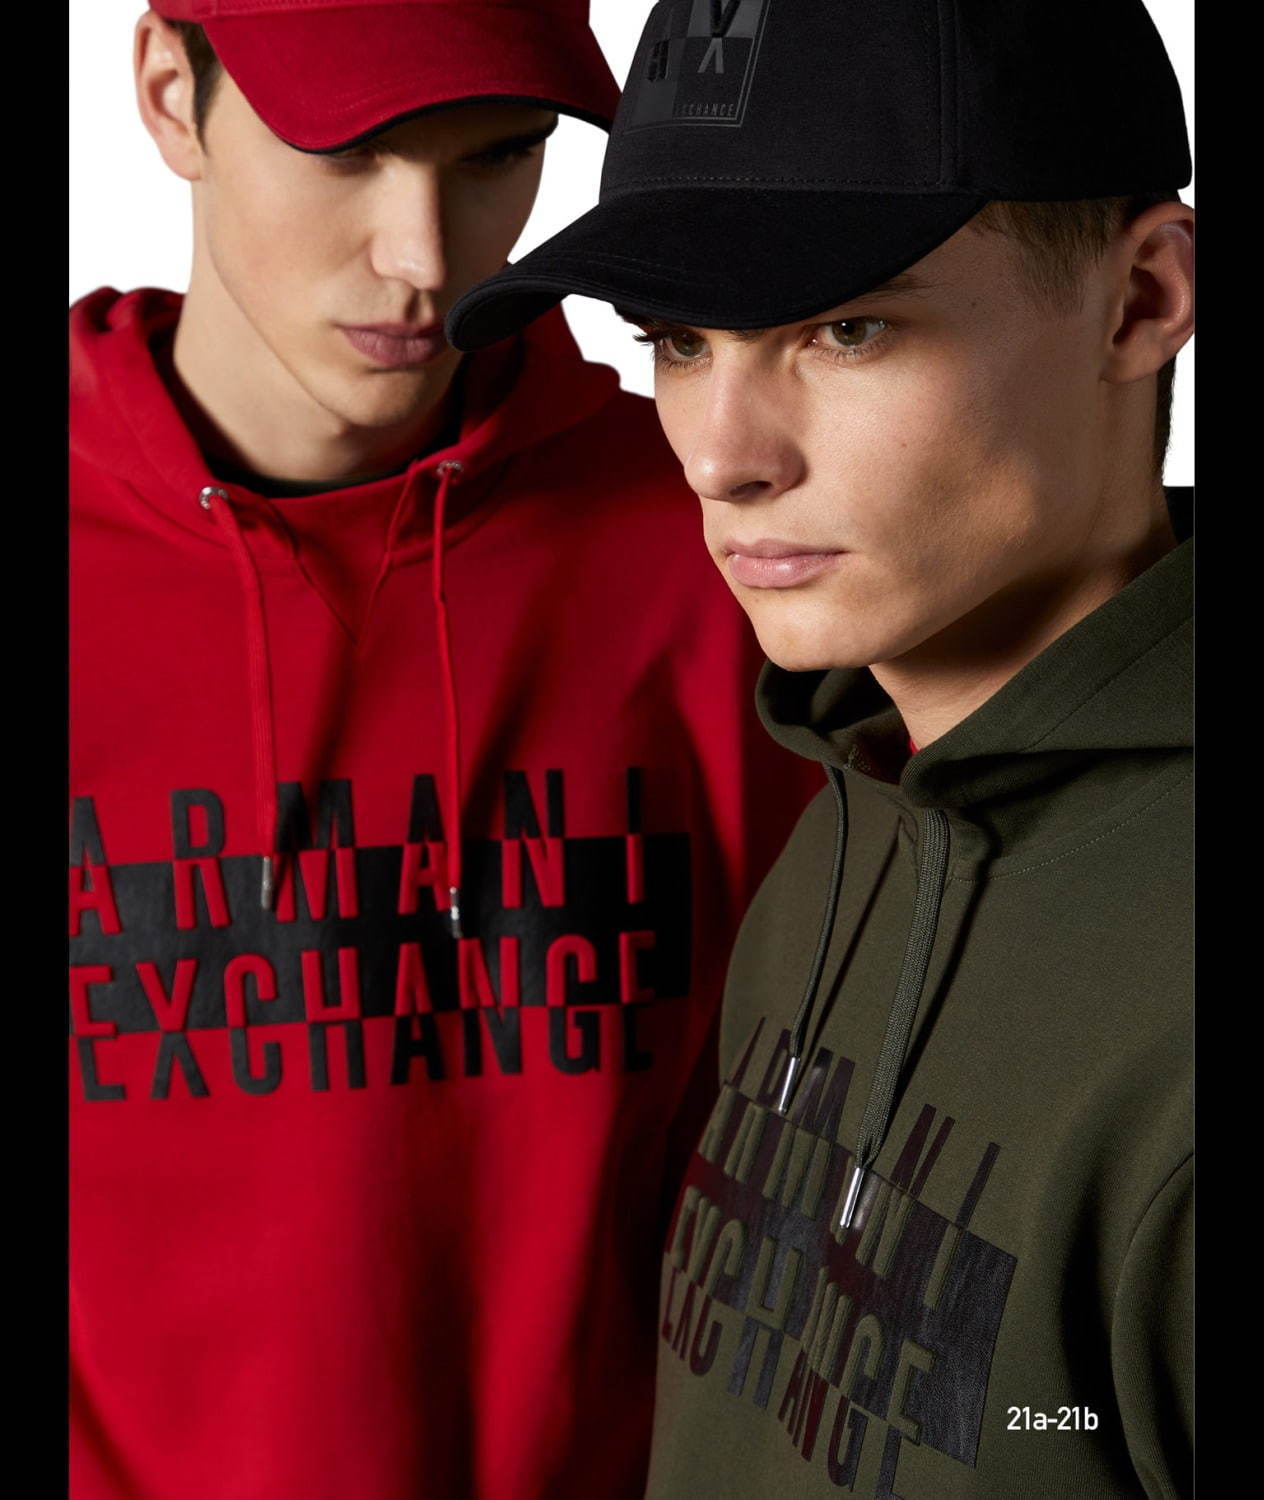 A|X アルマーニ エクスチェンジ(A|X ARMANI EXCHANGE) 2020-21年秋冬メンズコレクション  - 写真23